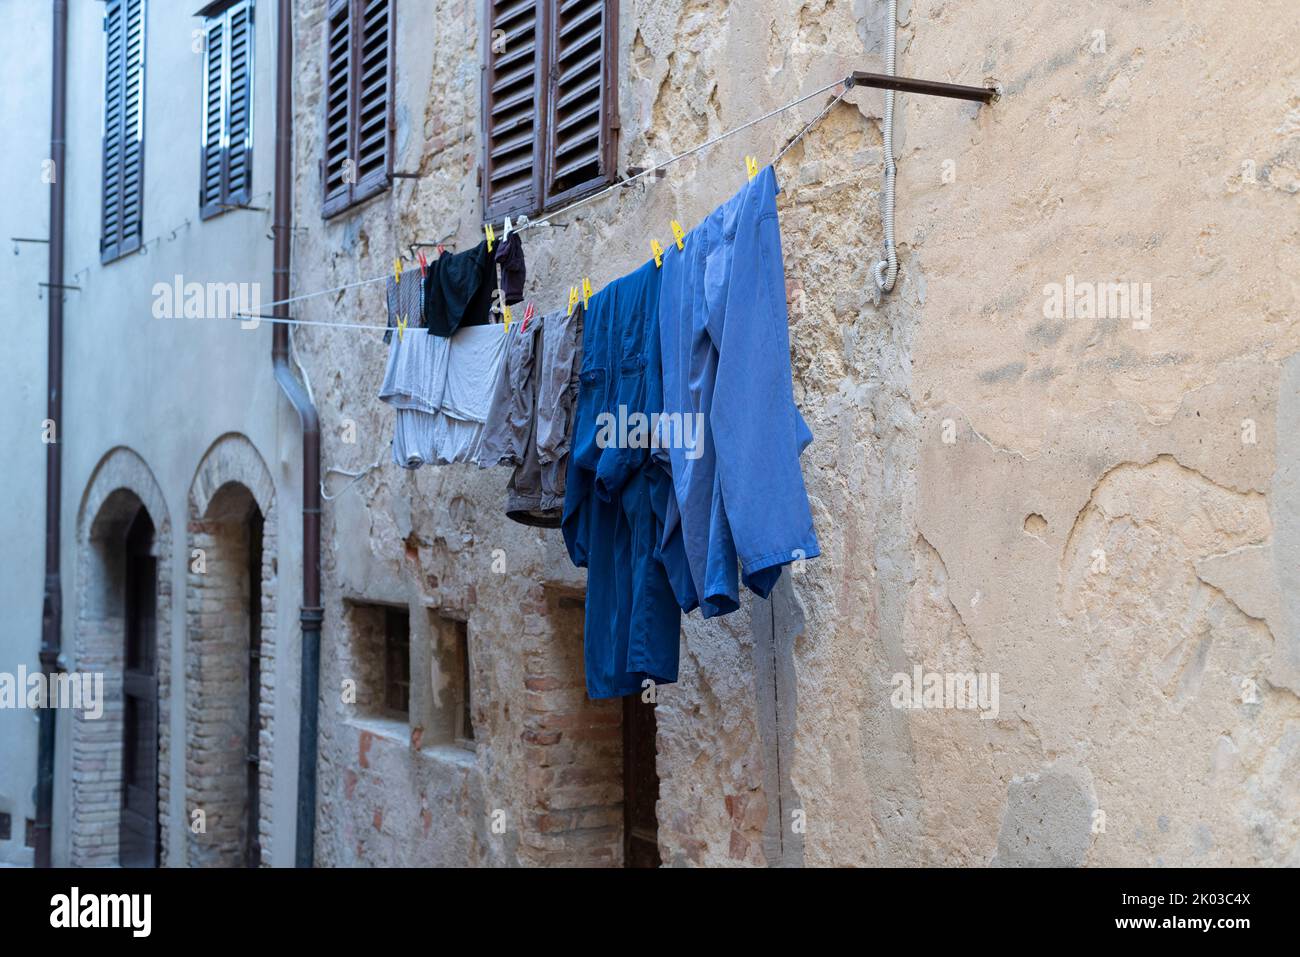 Laundry hanging to dry on a house wall, Castiglione della Pescaia, Grosseto province, Tuscany, Italy. Stock Photo